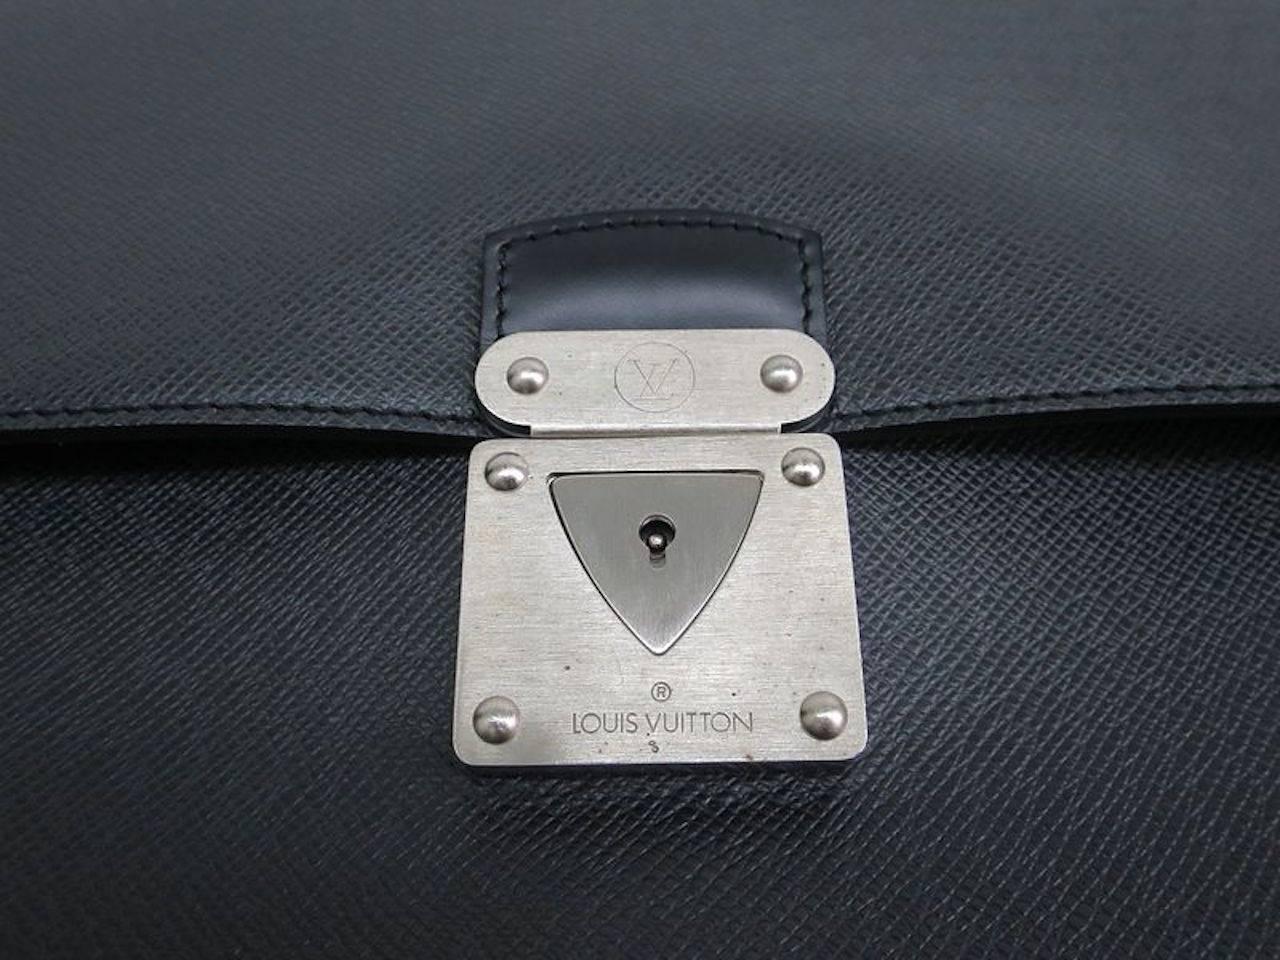 CURATOR'S NOTES

Leather
Palladium hardware
Push lock closure
Made in France
Date code RI0094
Handle 8.7